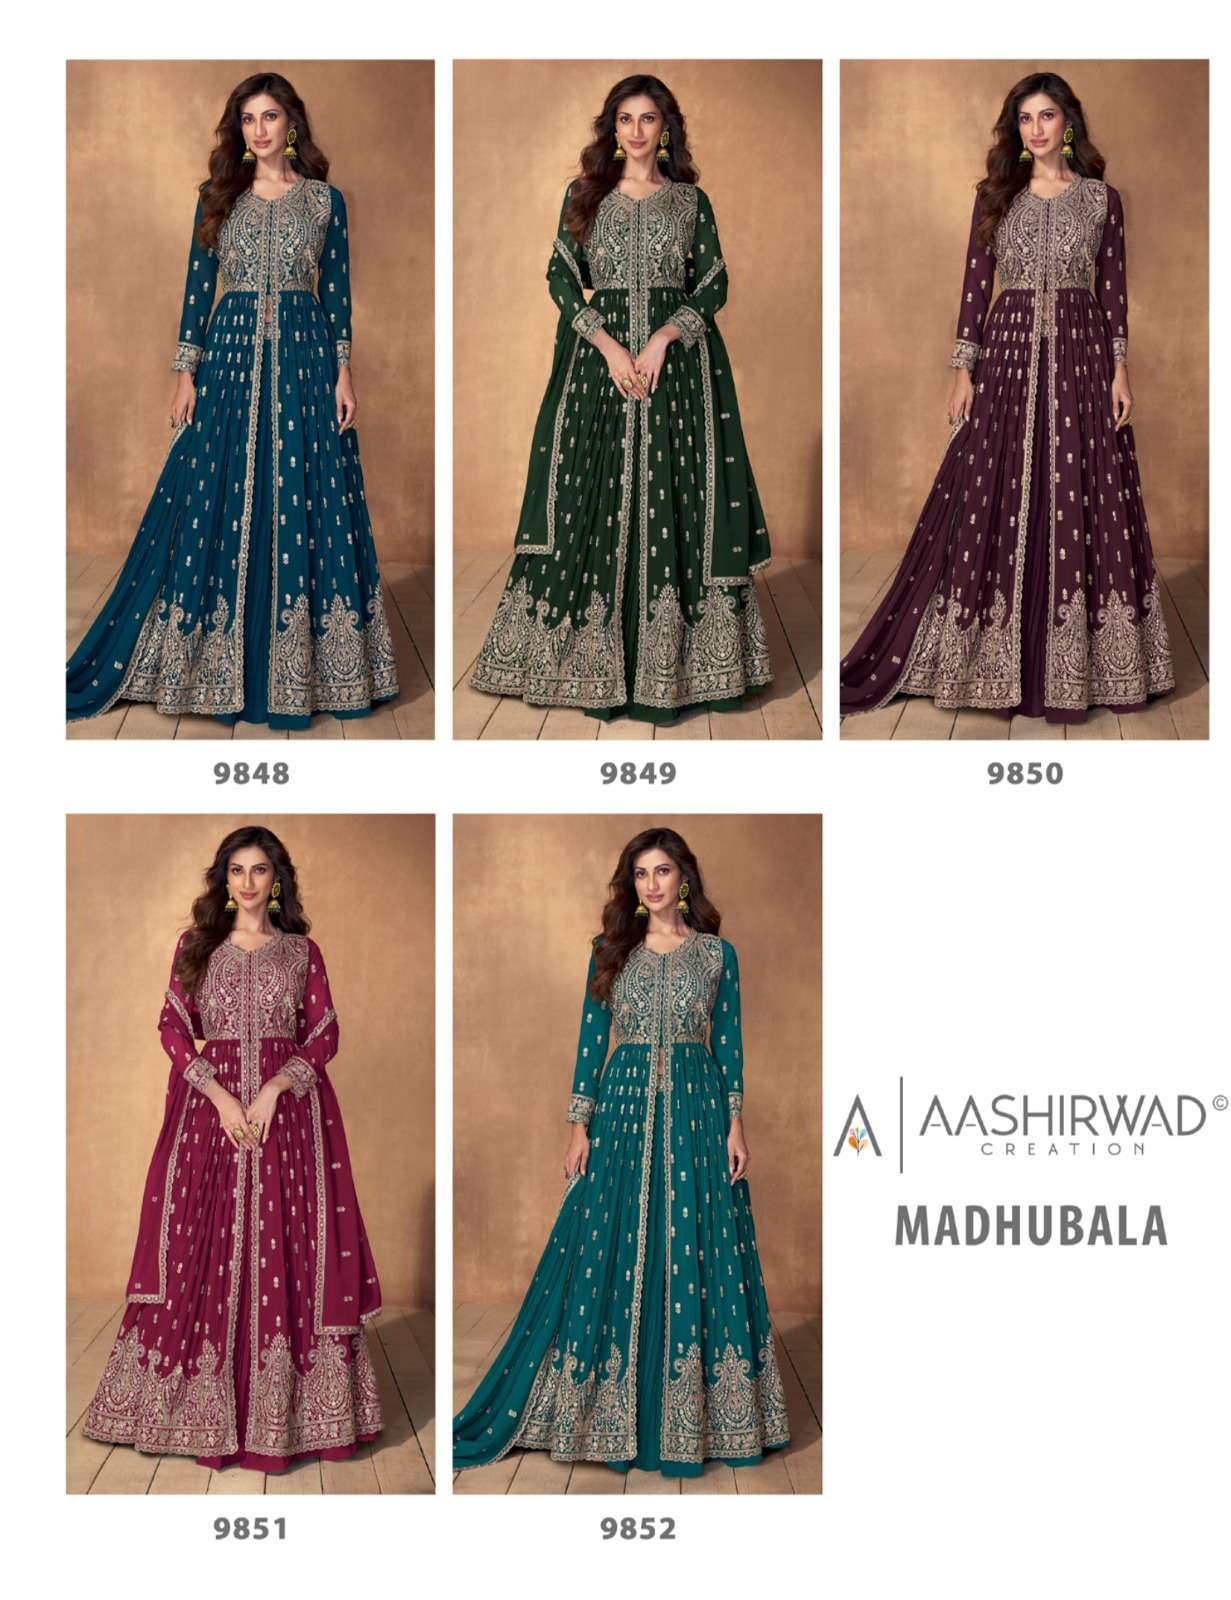 aashirwad creation madhubala 9848-9852 series latest designer anarkali salwar kameez wholesaler surat gujarat